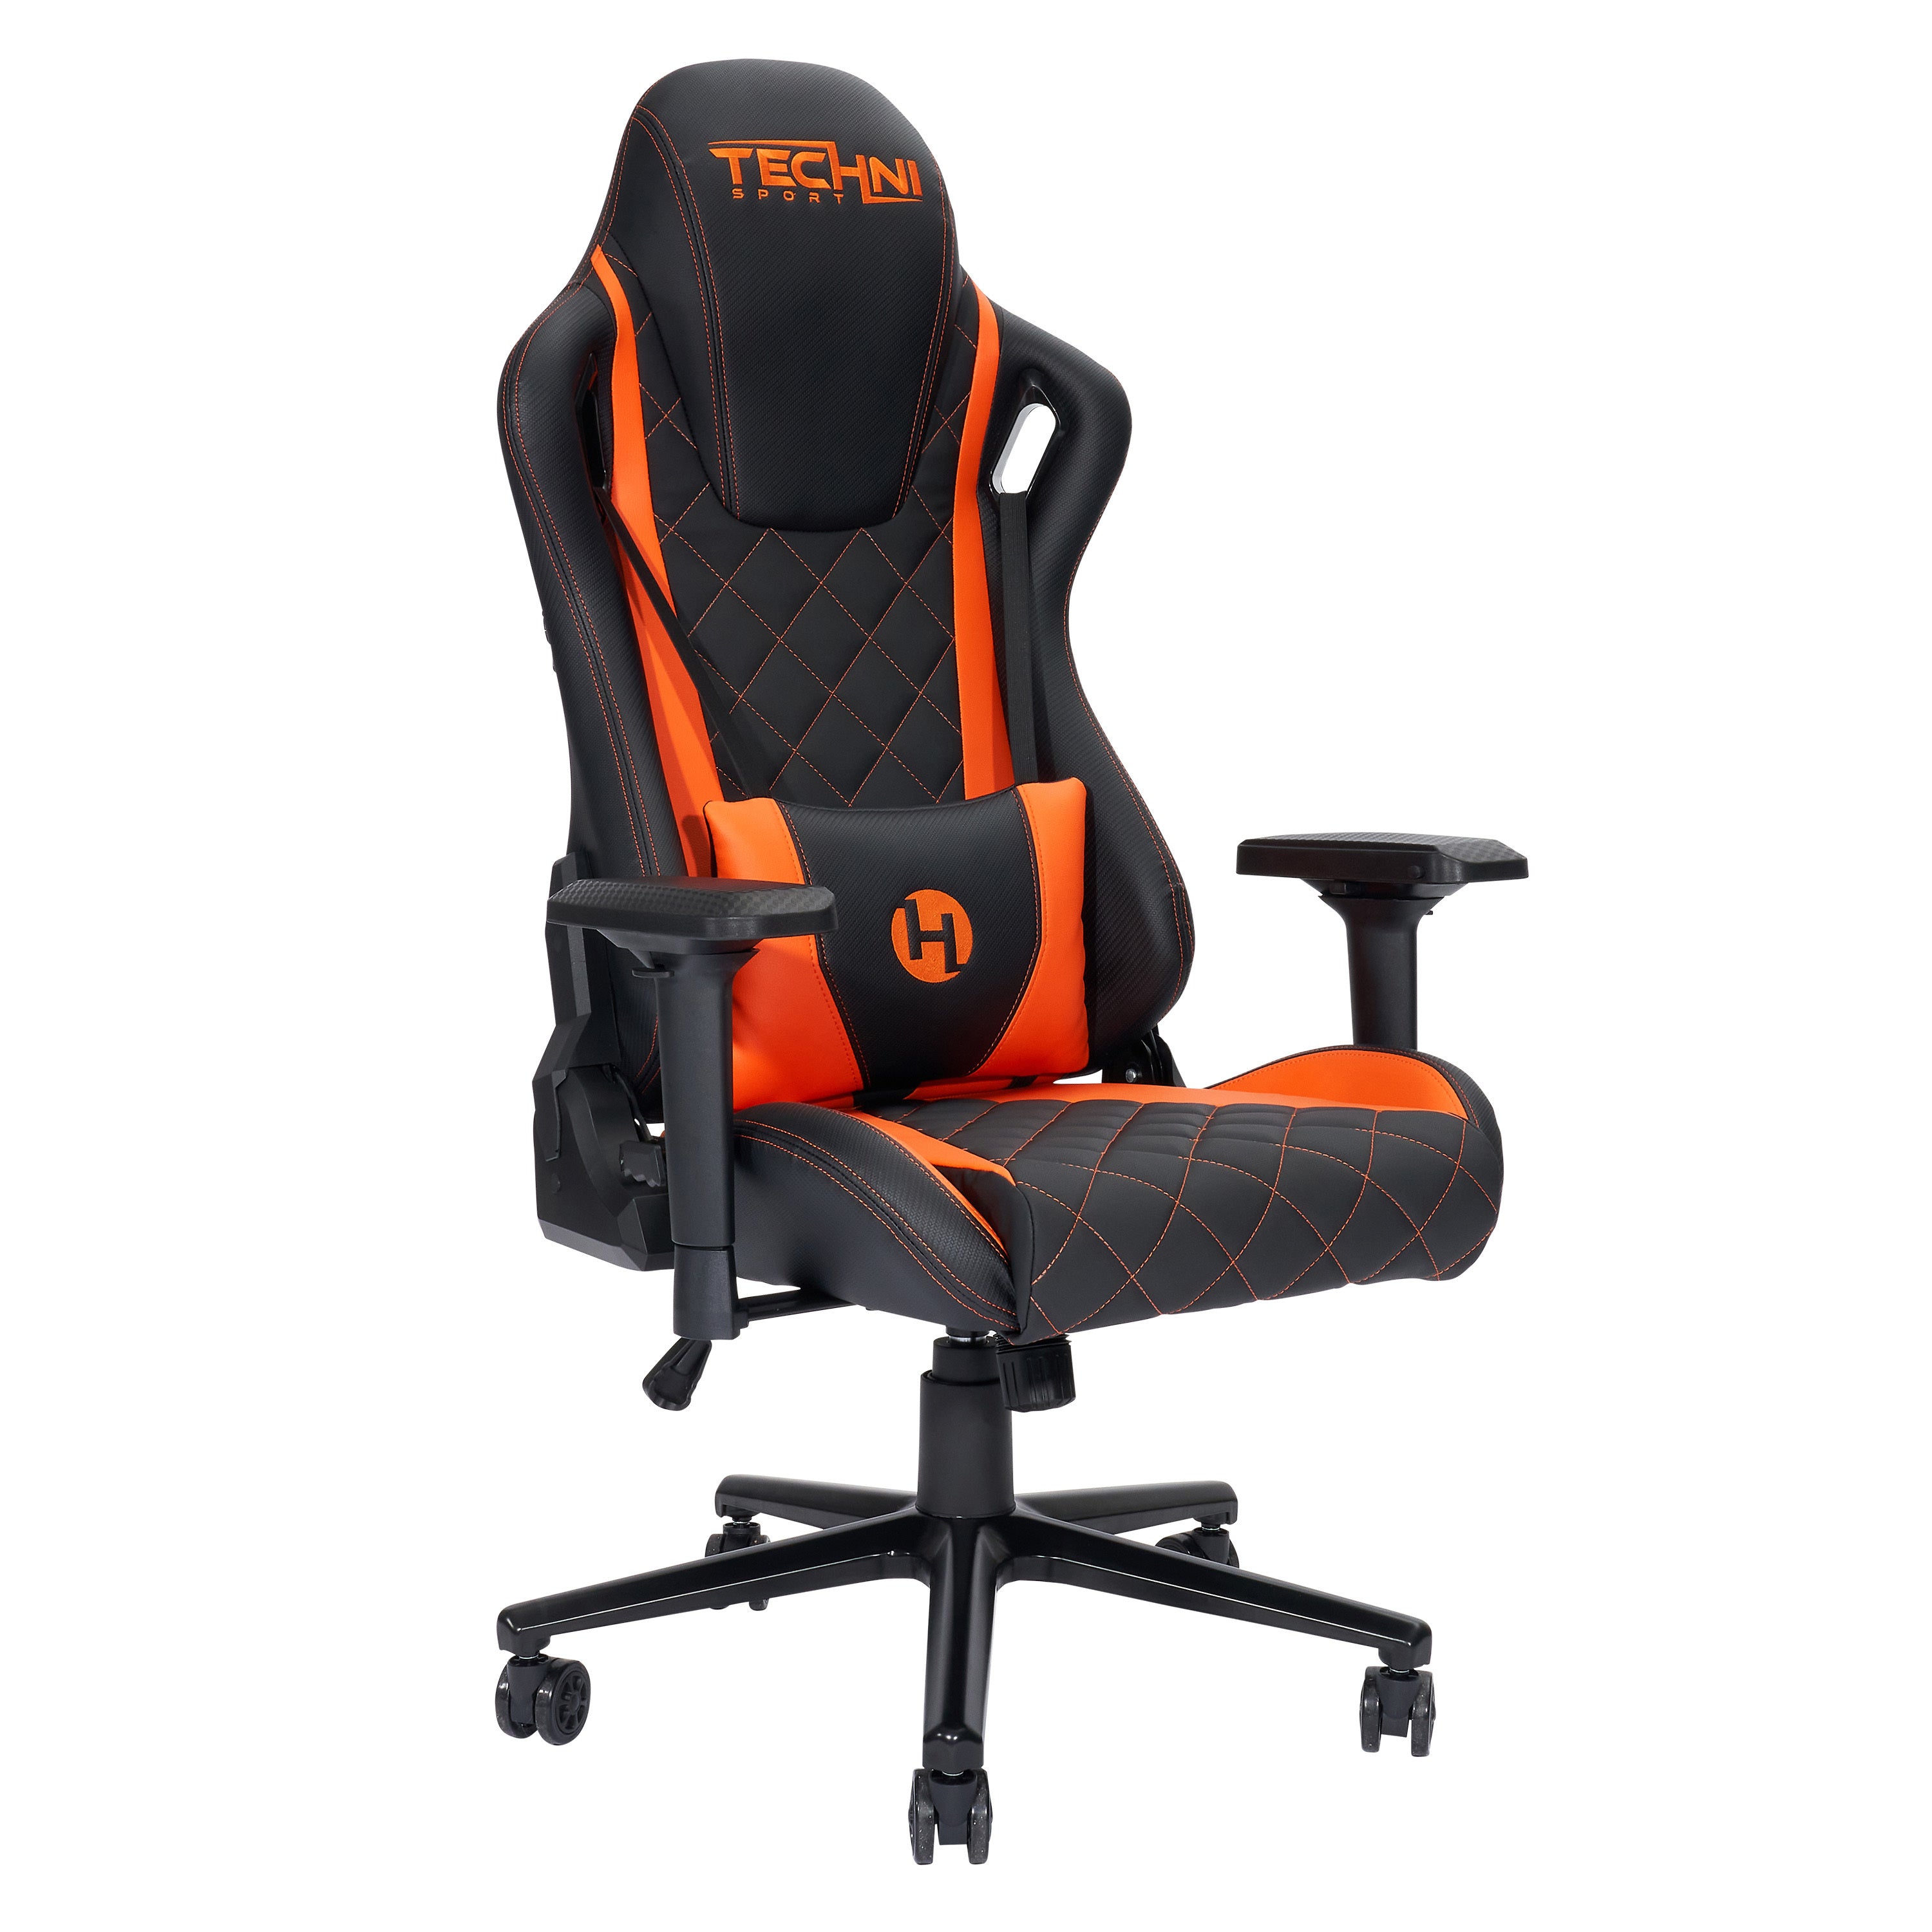 Techni Sport TS-84 Ergonomic High Back Racing Style Gaming Chair (Orange)